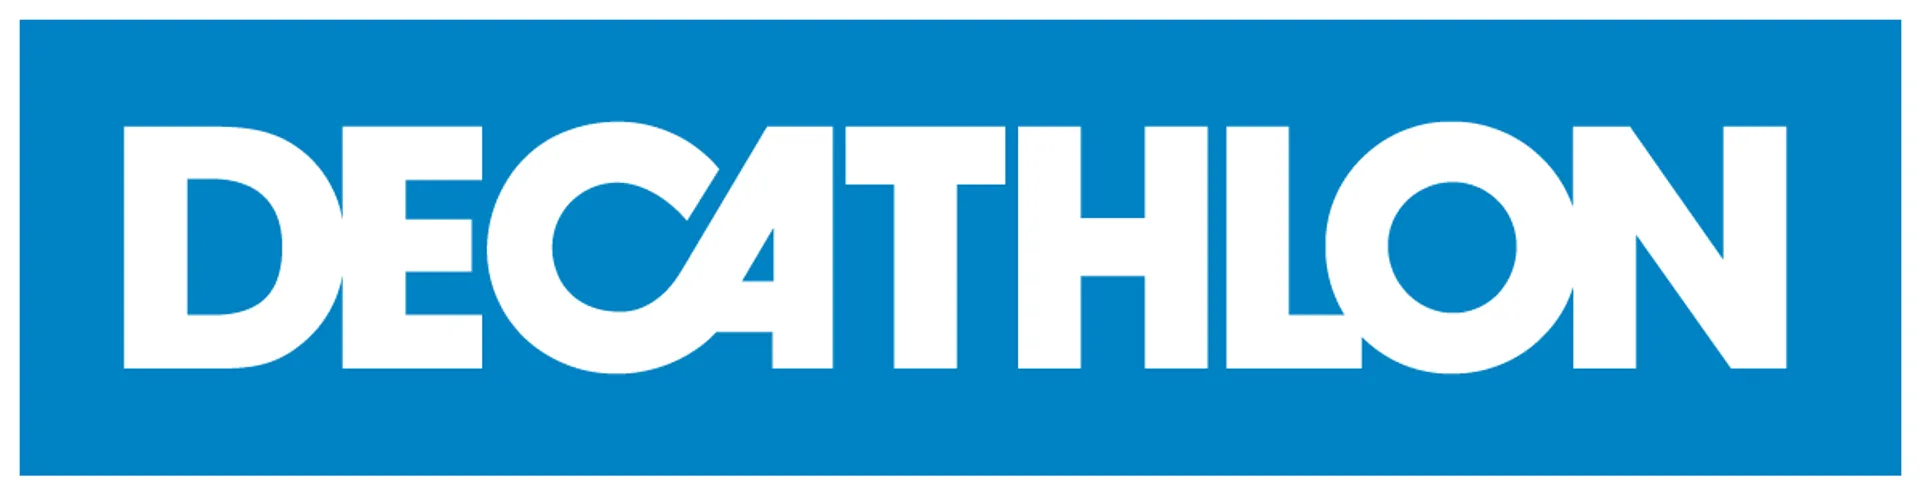 DECATHLON logo of current flyer